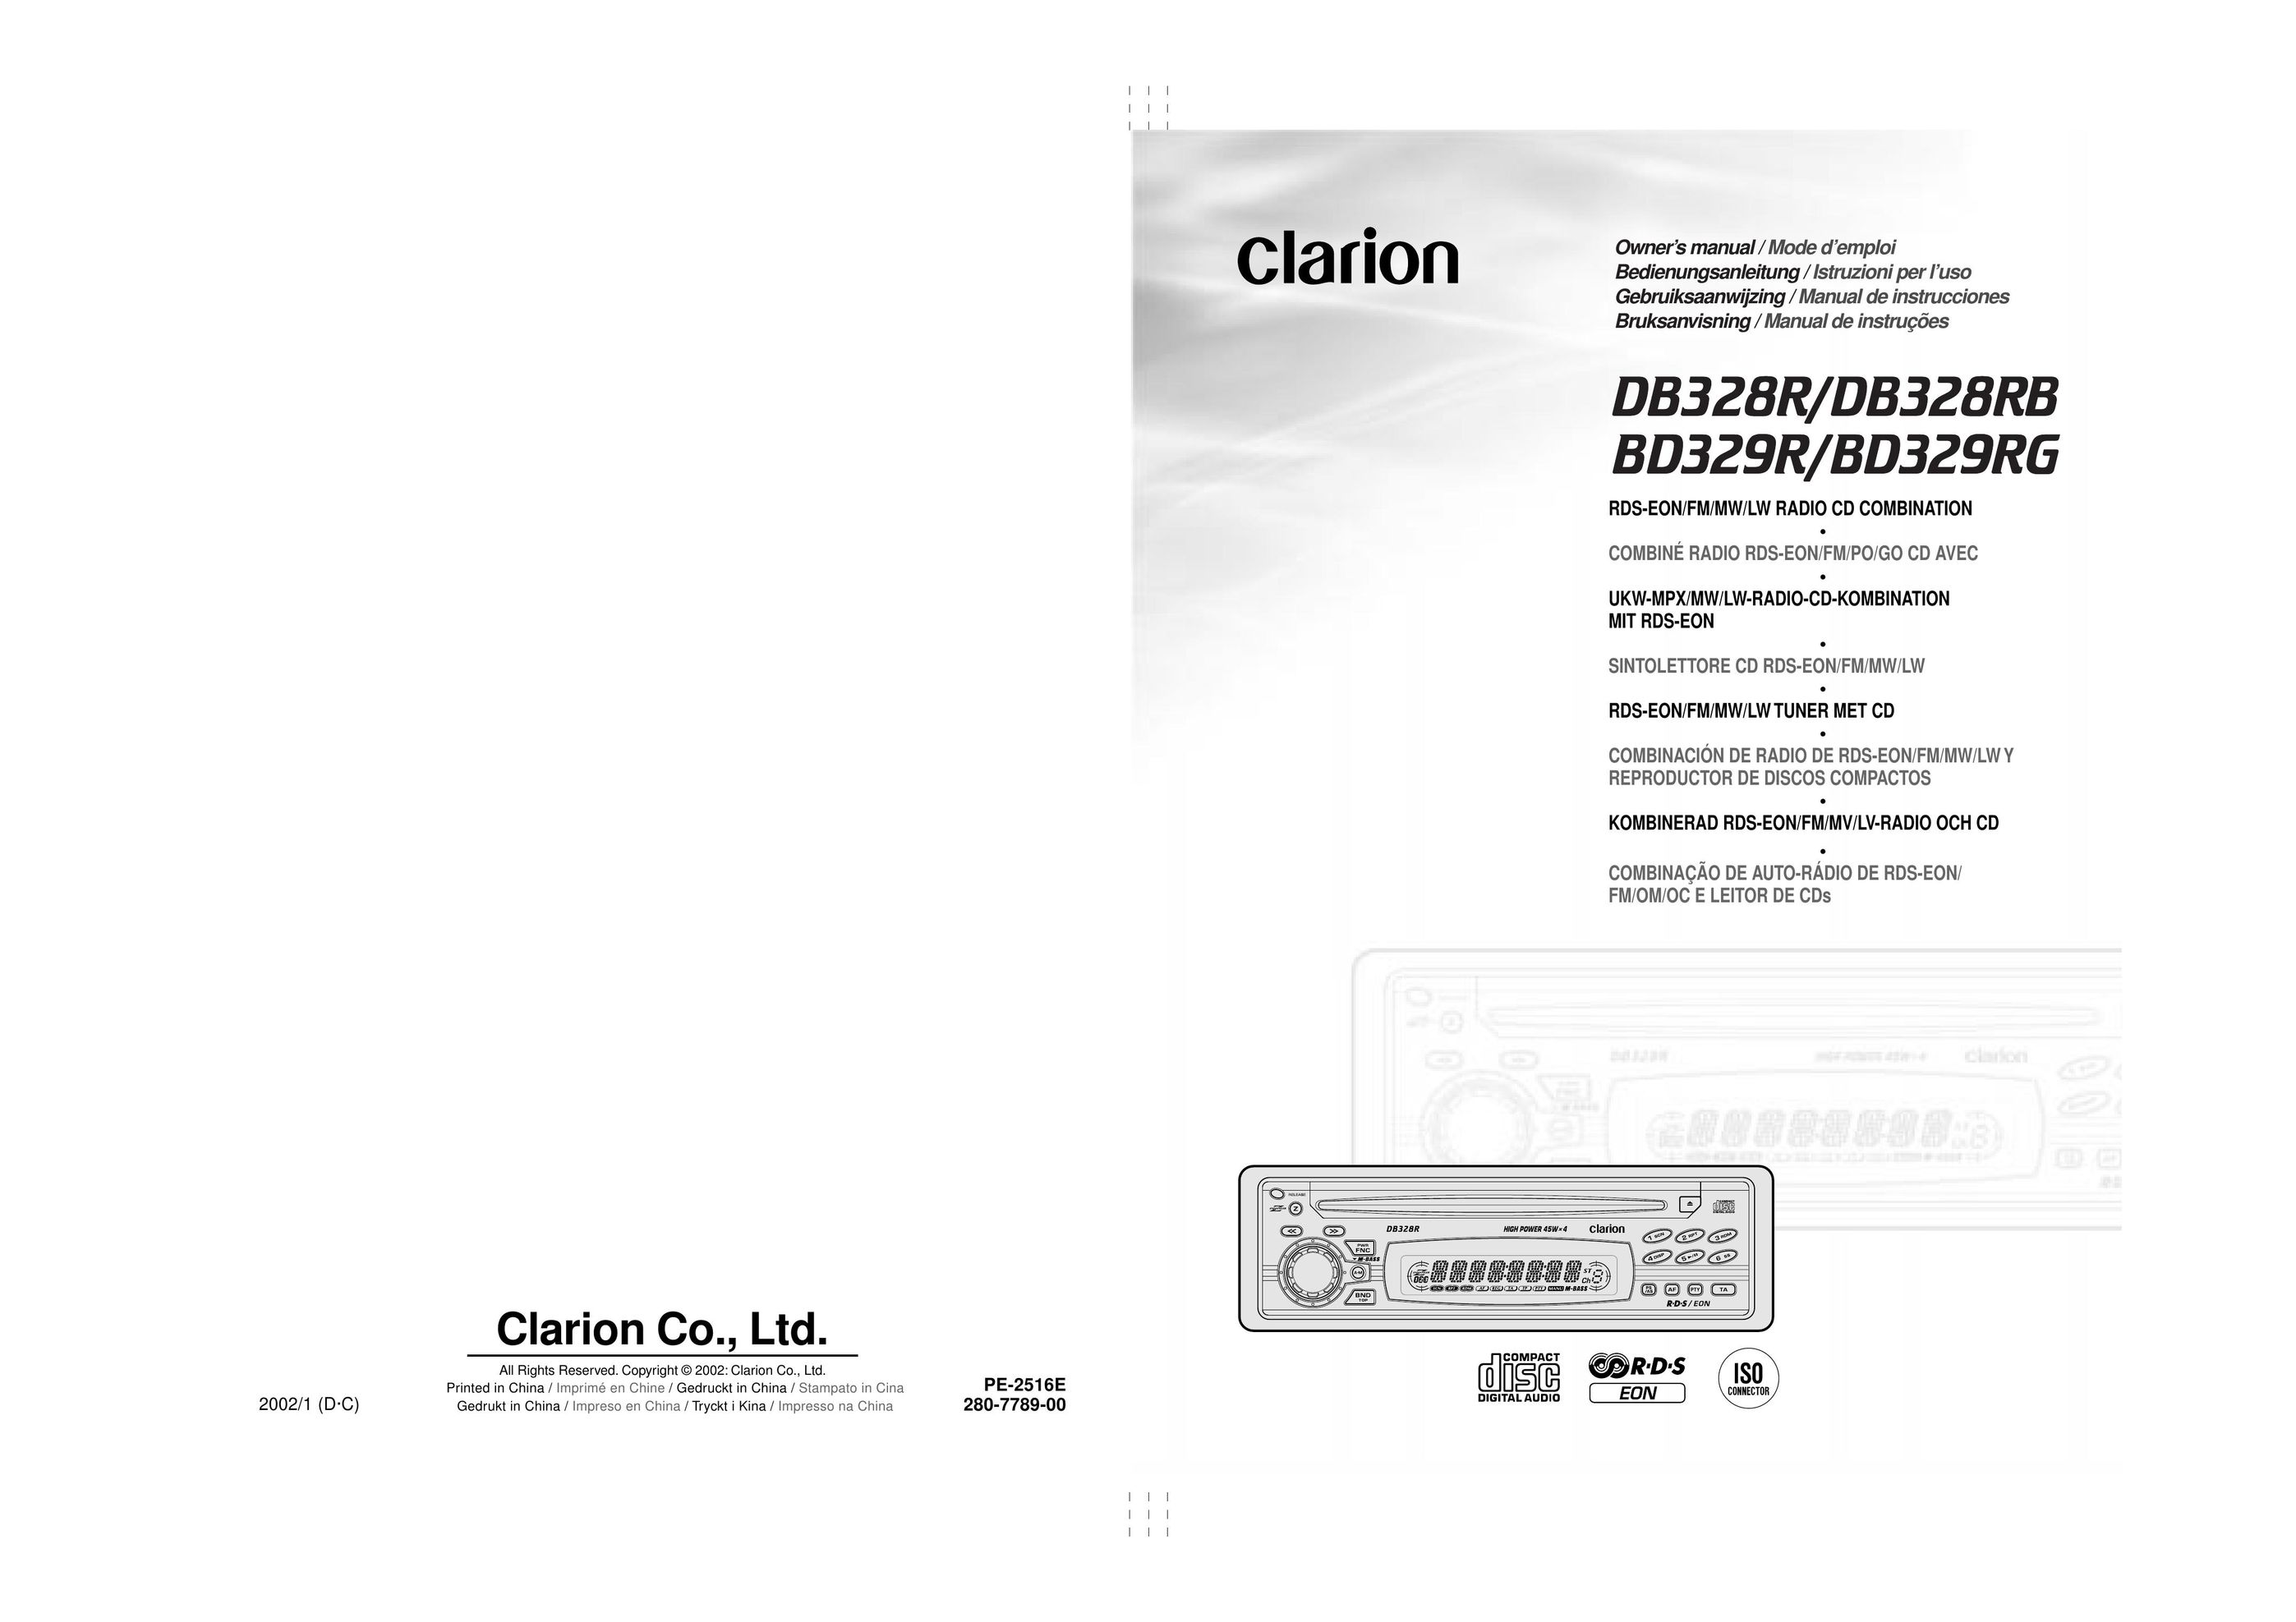 Clarion BD329RG CD Player User Manual